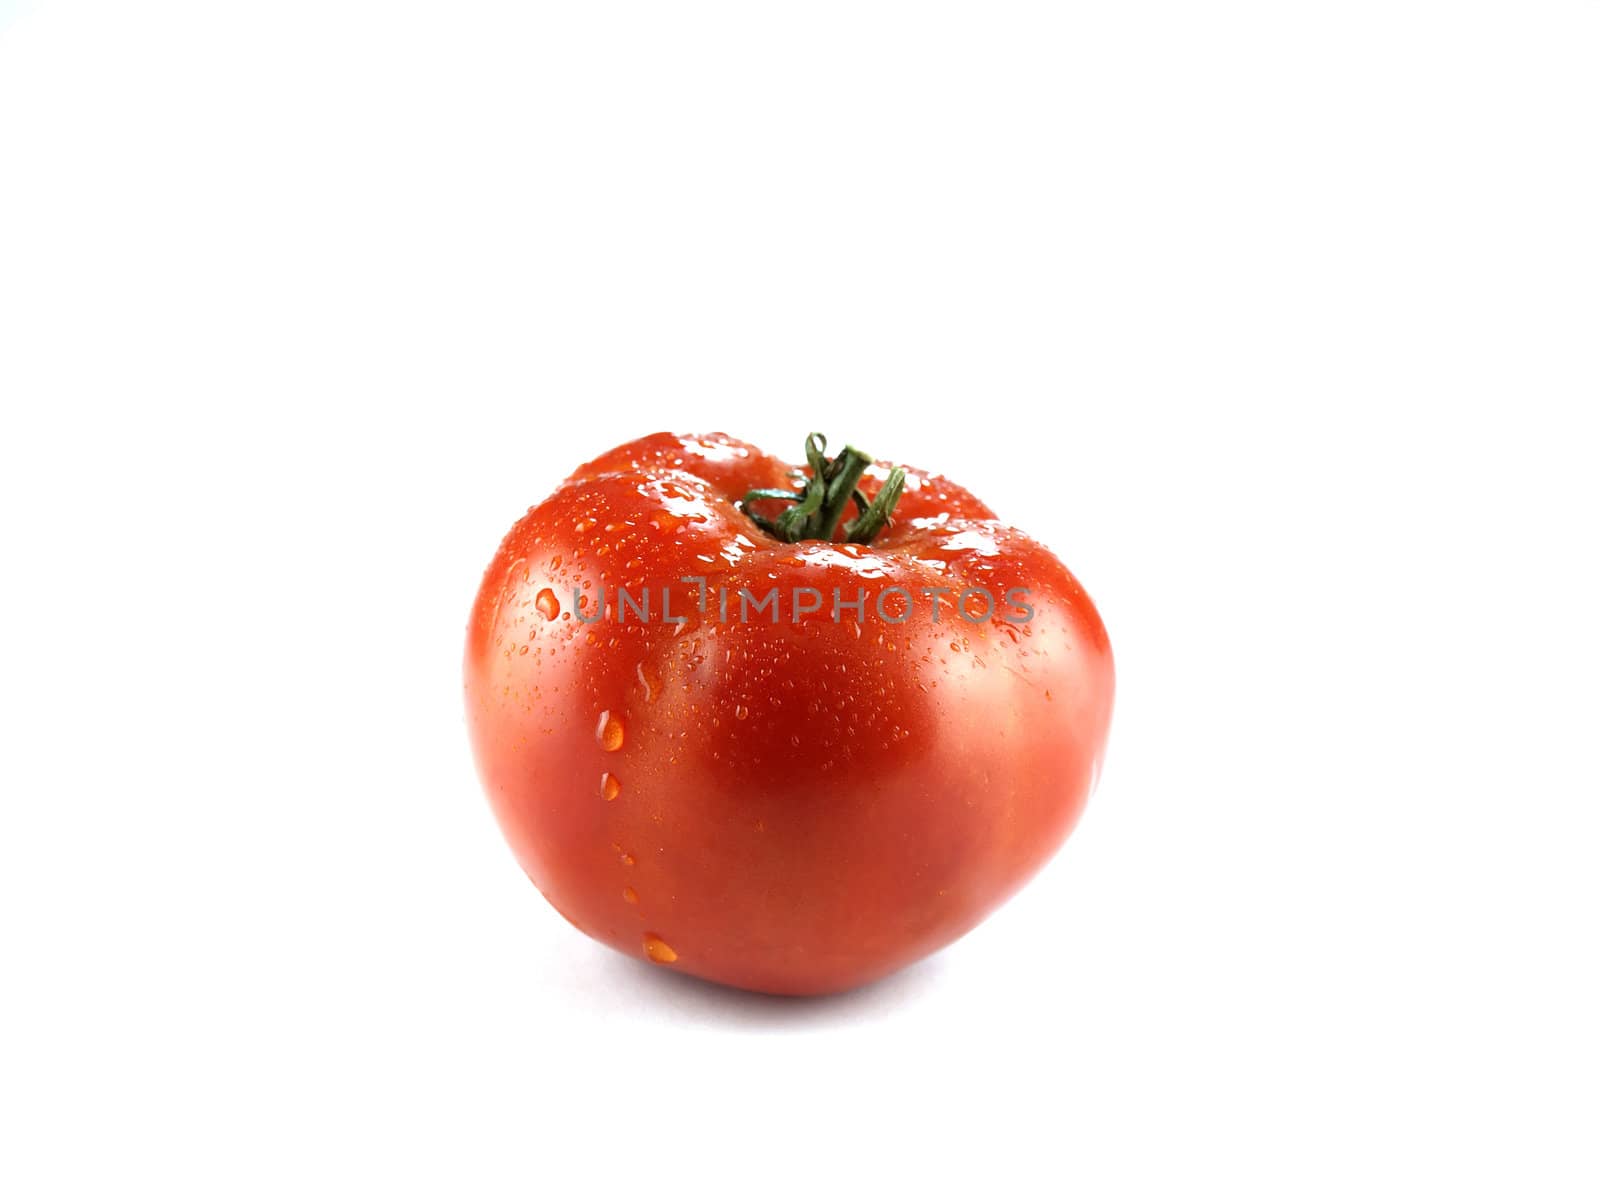 Wet tomato over white